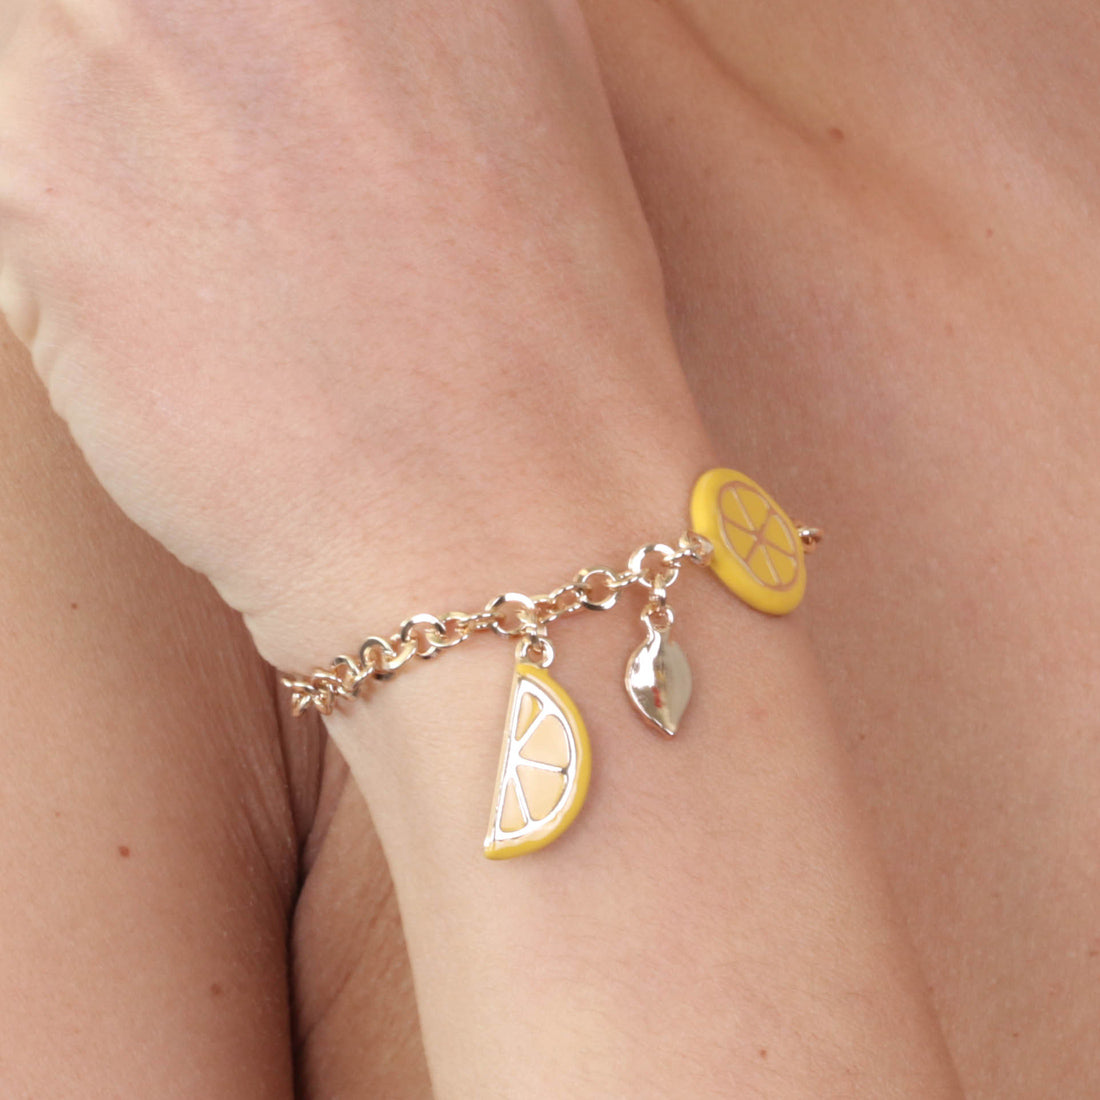 Rolò shirt metal bracelet, with sicily lemons charms pending embellished with colored glazes